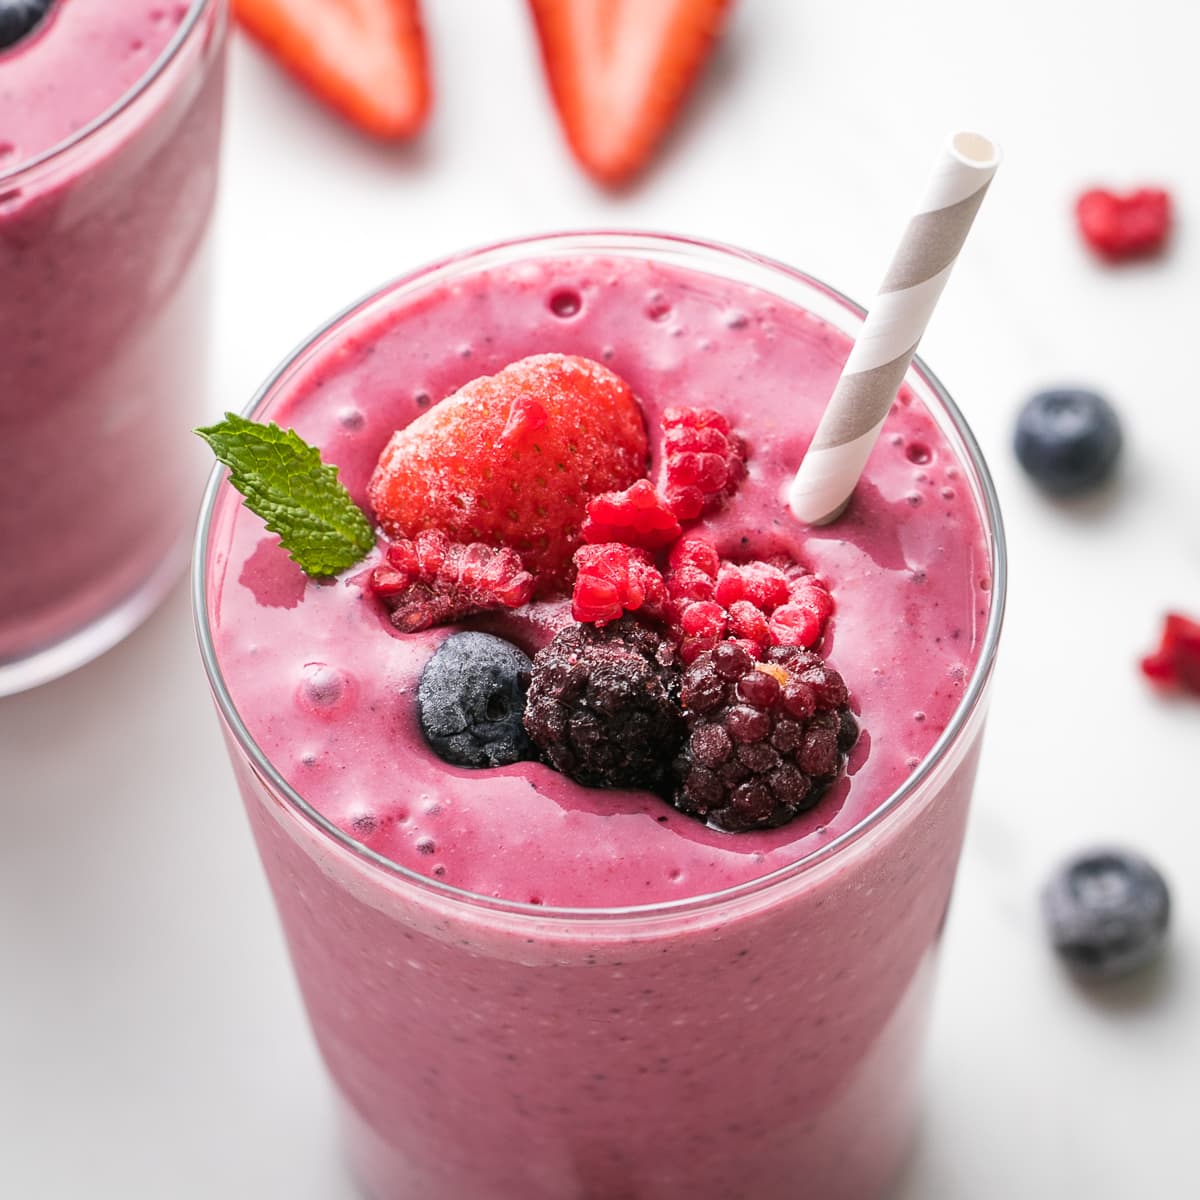 Mixed Berry + Yogurt Smoothie (Healthy, Easy, Vegan) - Simple Veganista